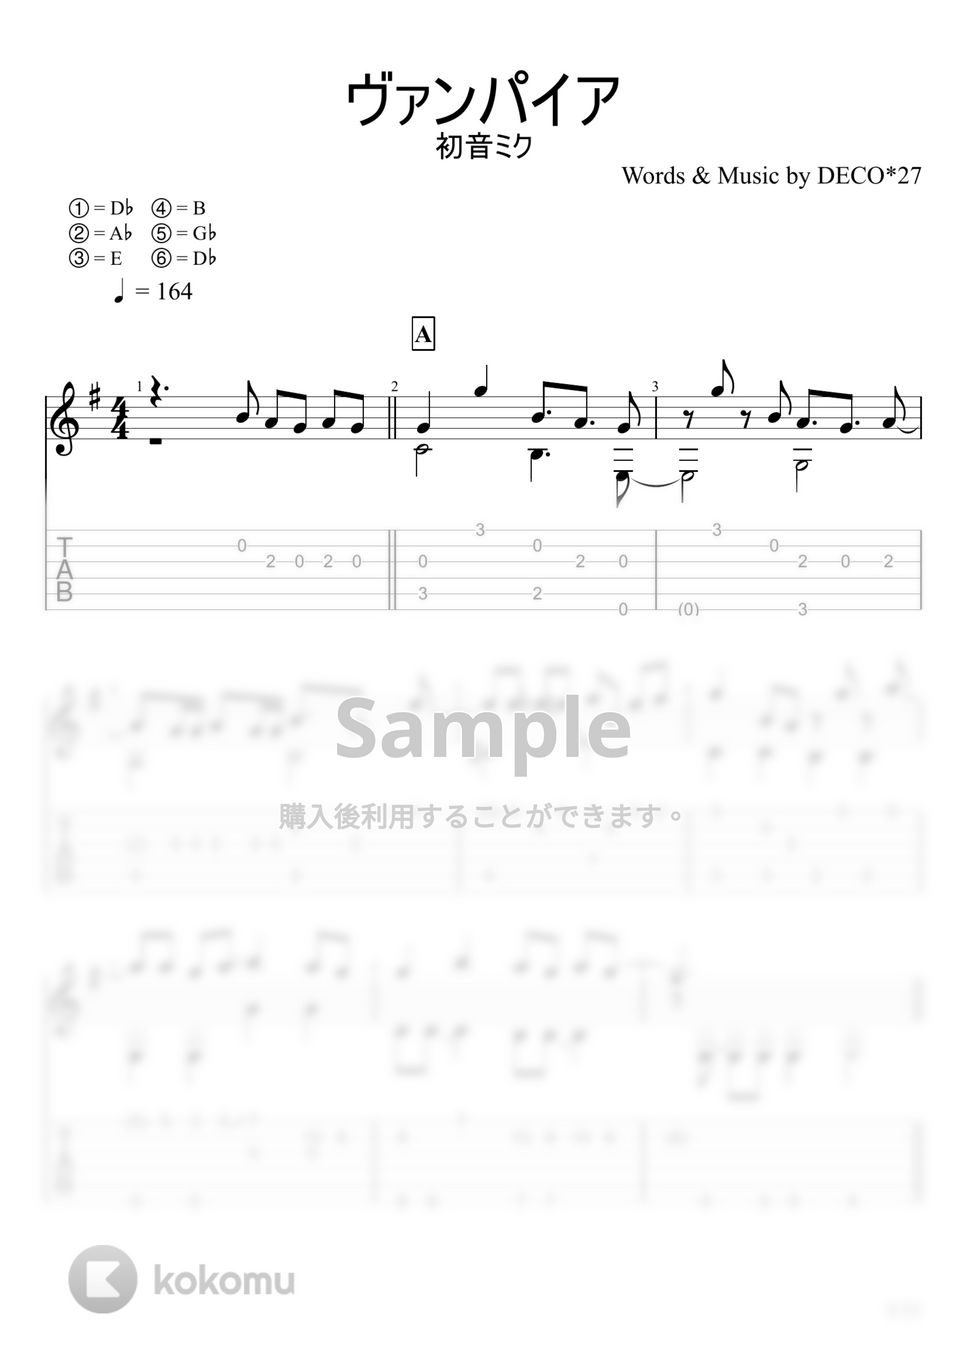 DECO*27 - ヴァンパイア (ソロギター) by u3danchou